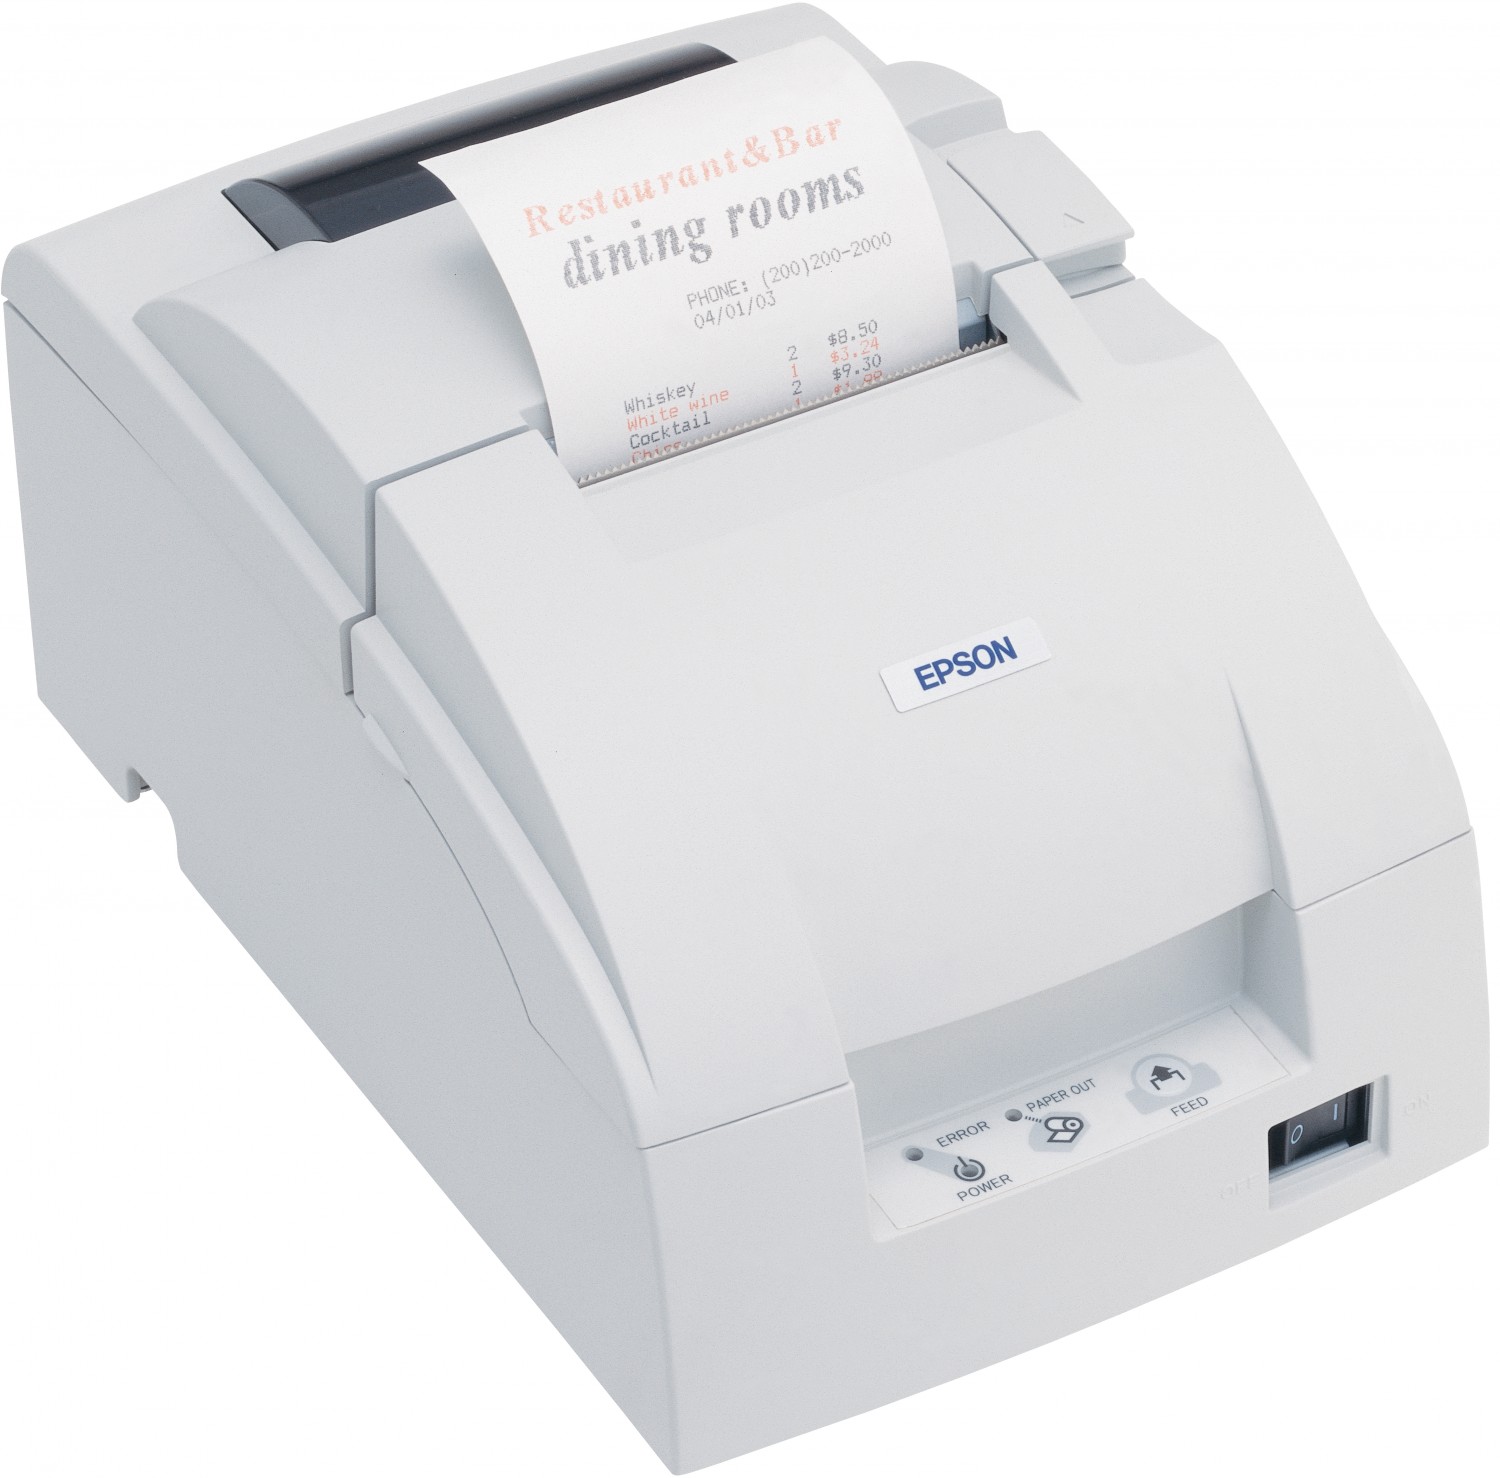 epson printer m188d